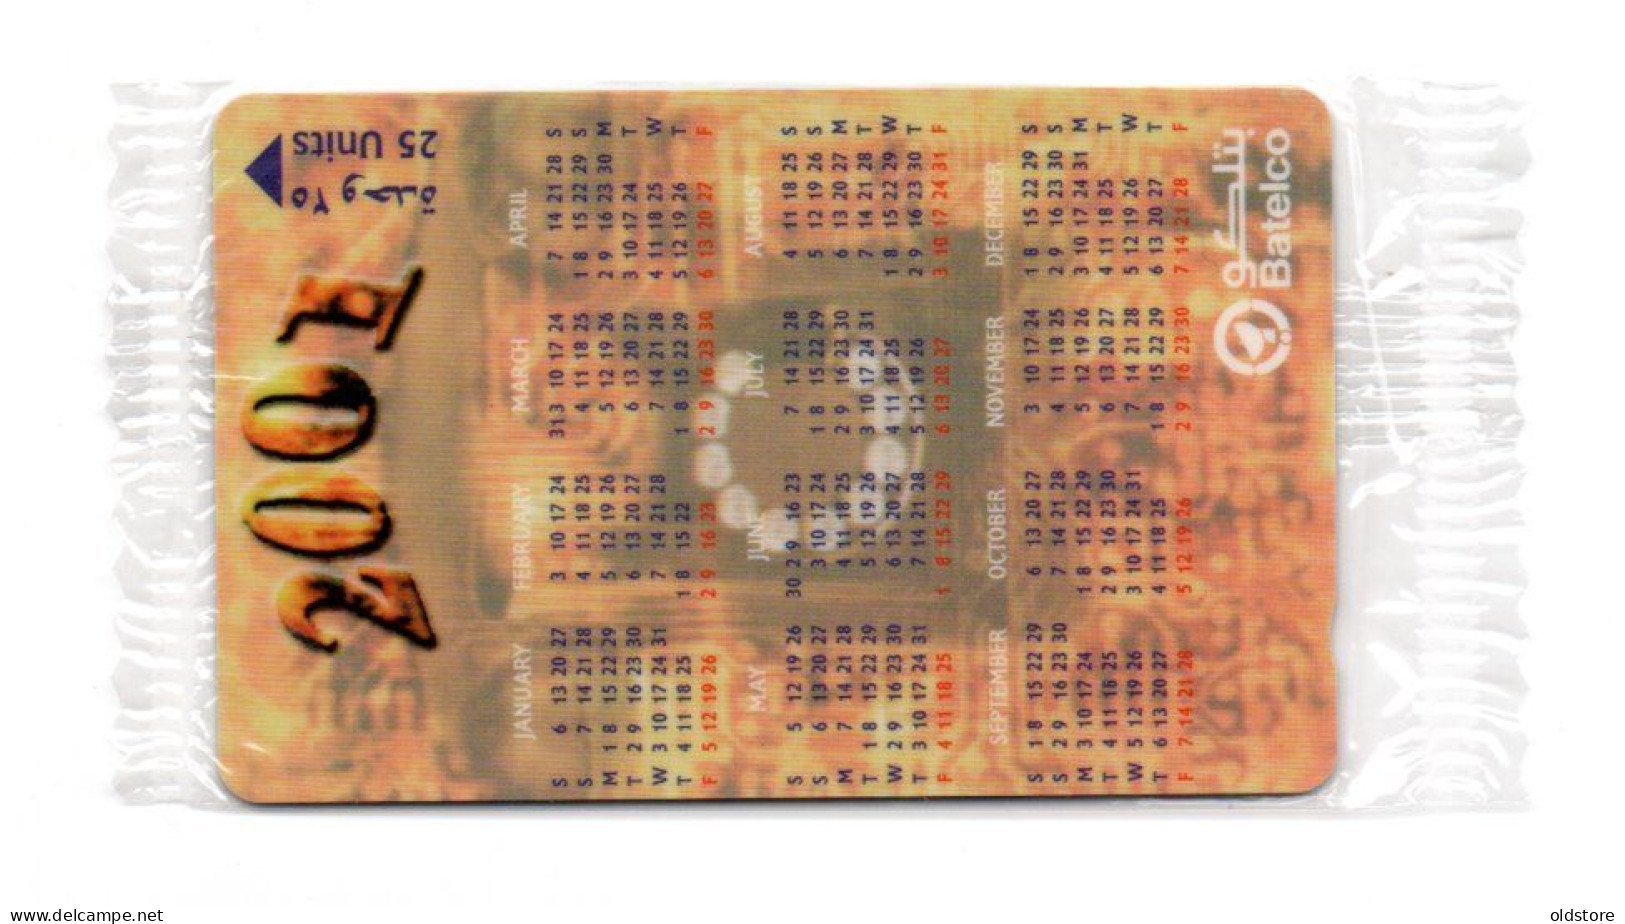 Bahrain Phonecards - 2001 Calendar - Mint Card - Low Serial Number 000080 - ND 2001 - Bahrain